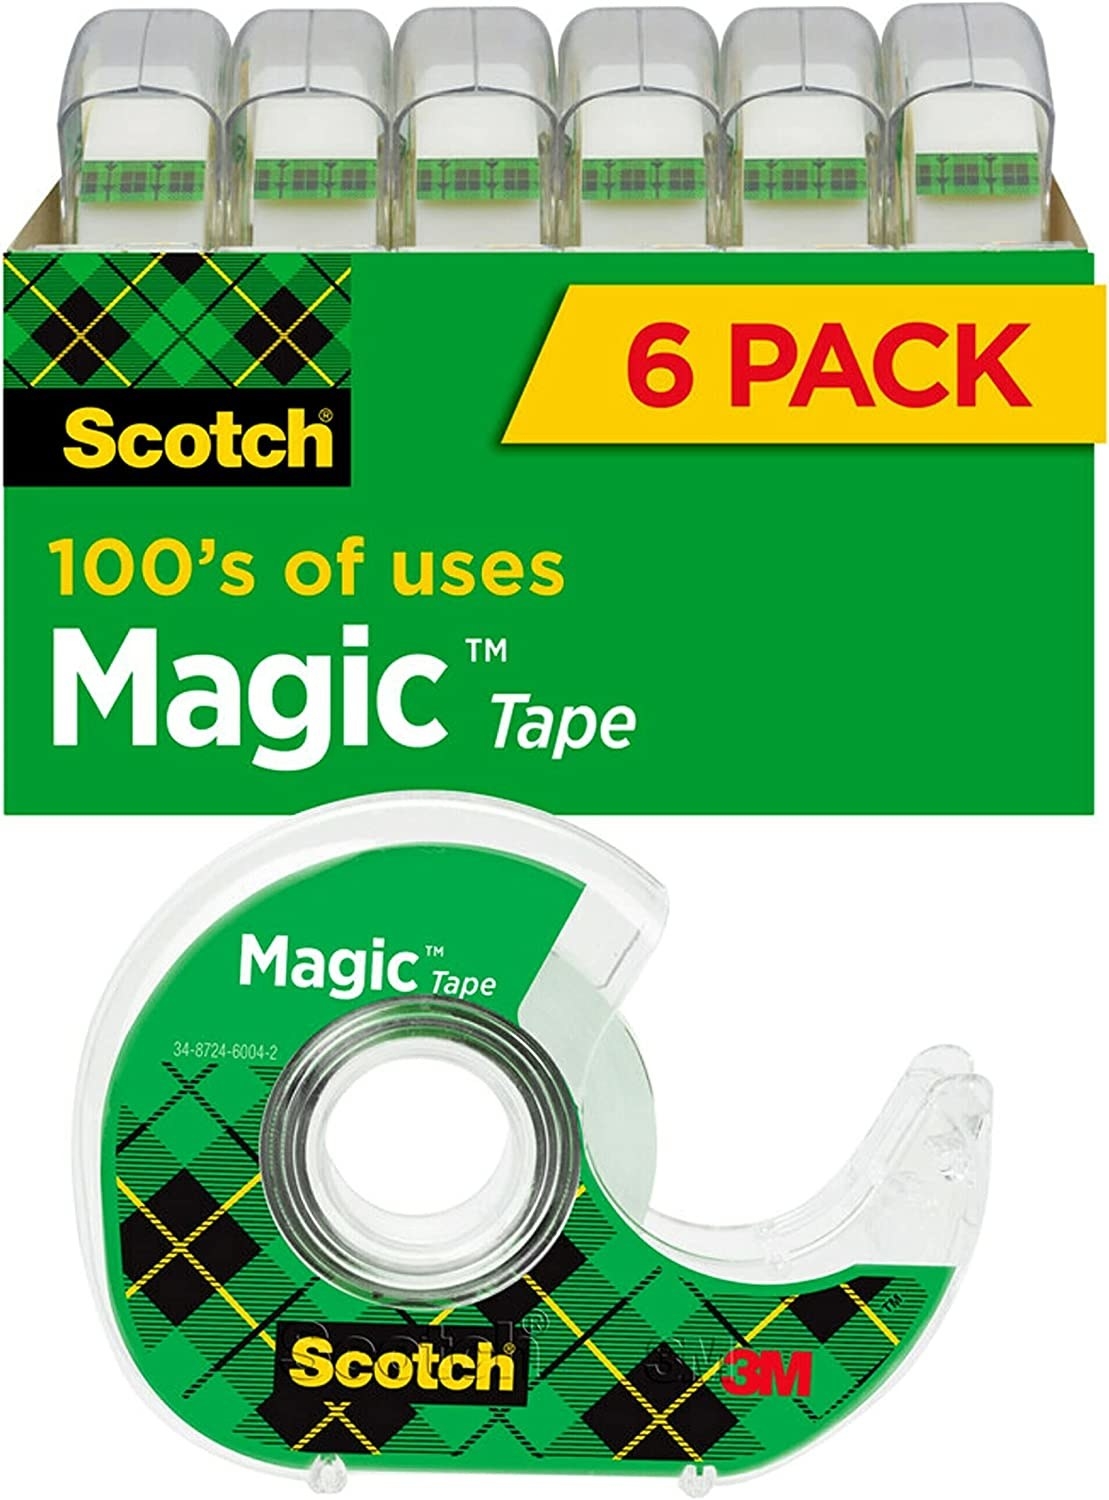 Six rolls of tape